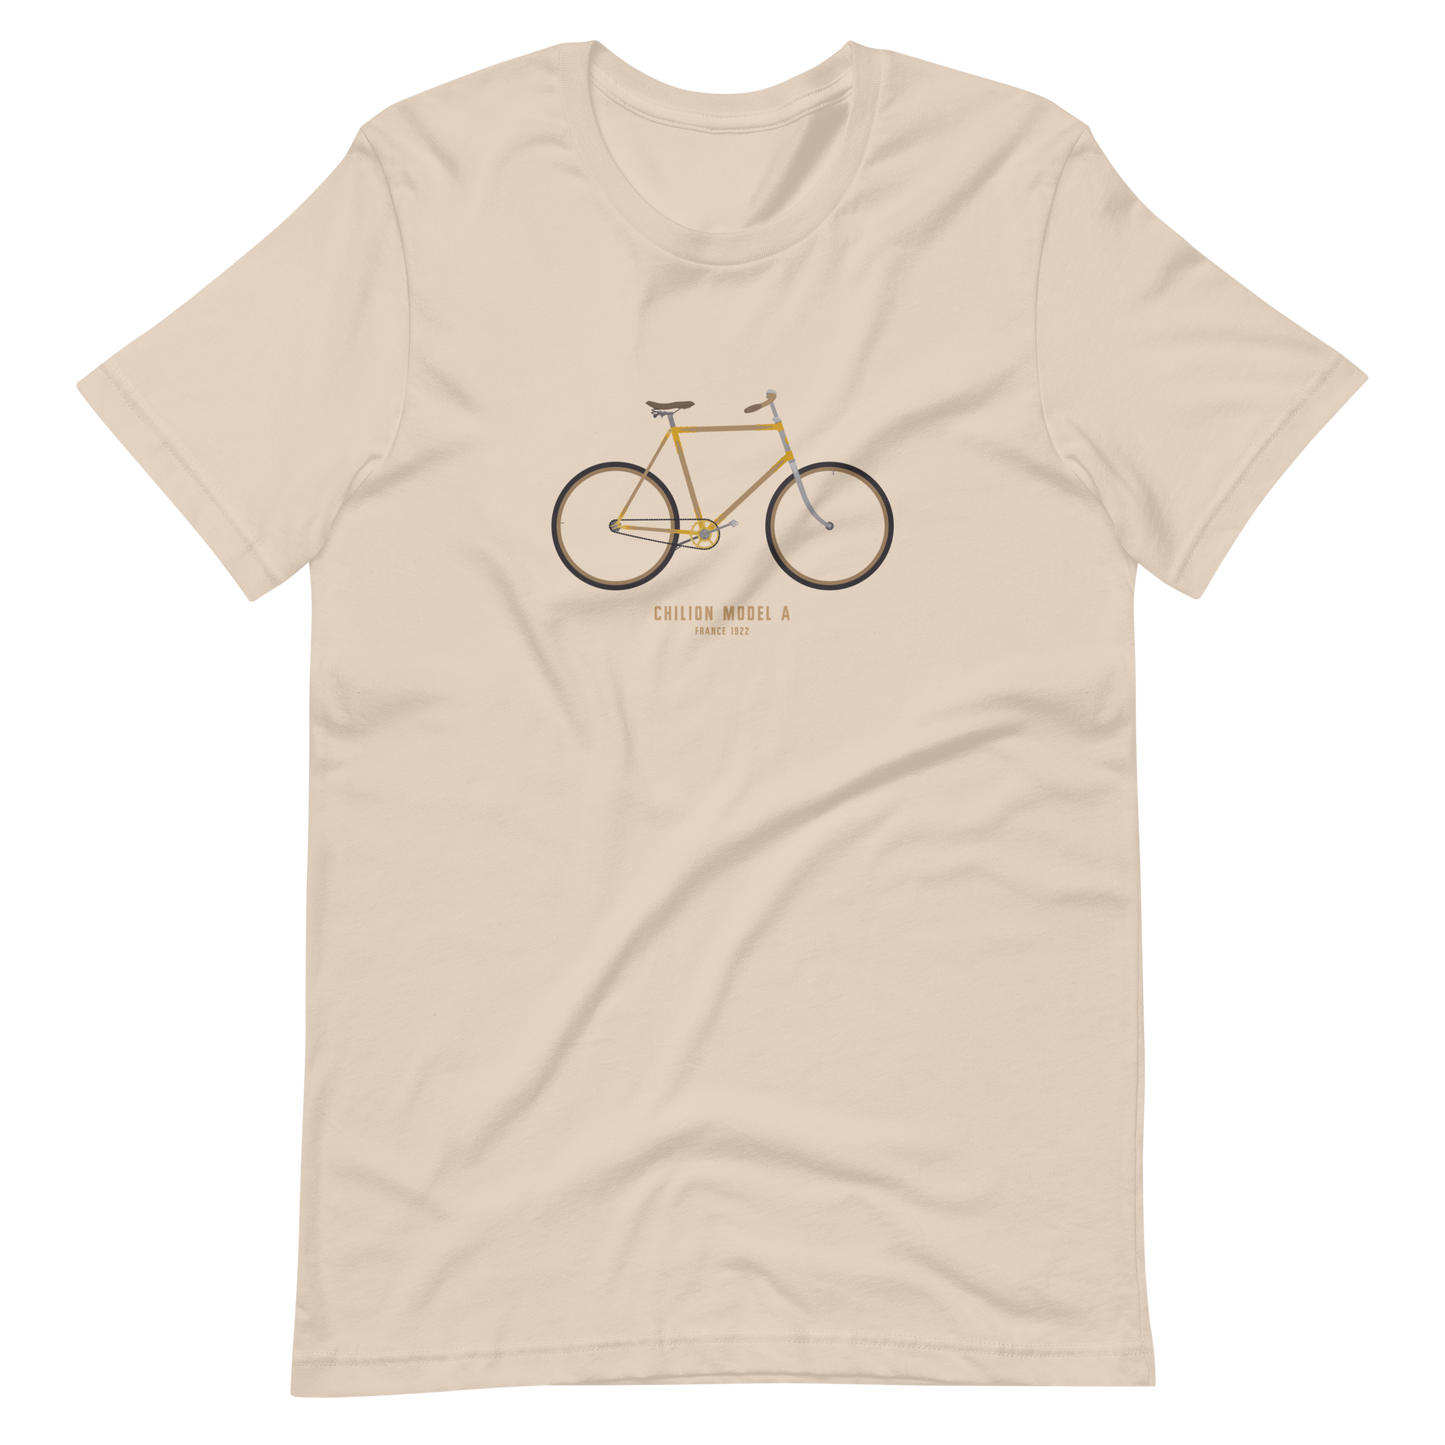 T-Shirt Chilion Fahrrad Model A, 1922